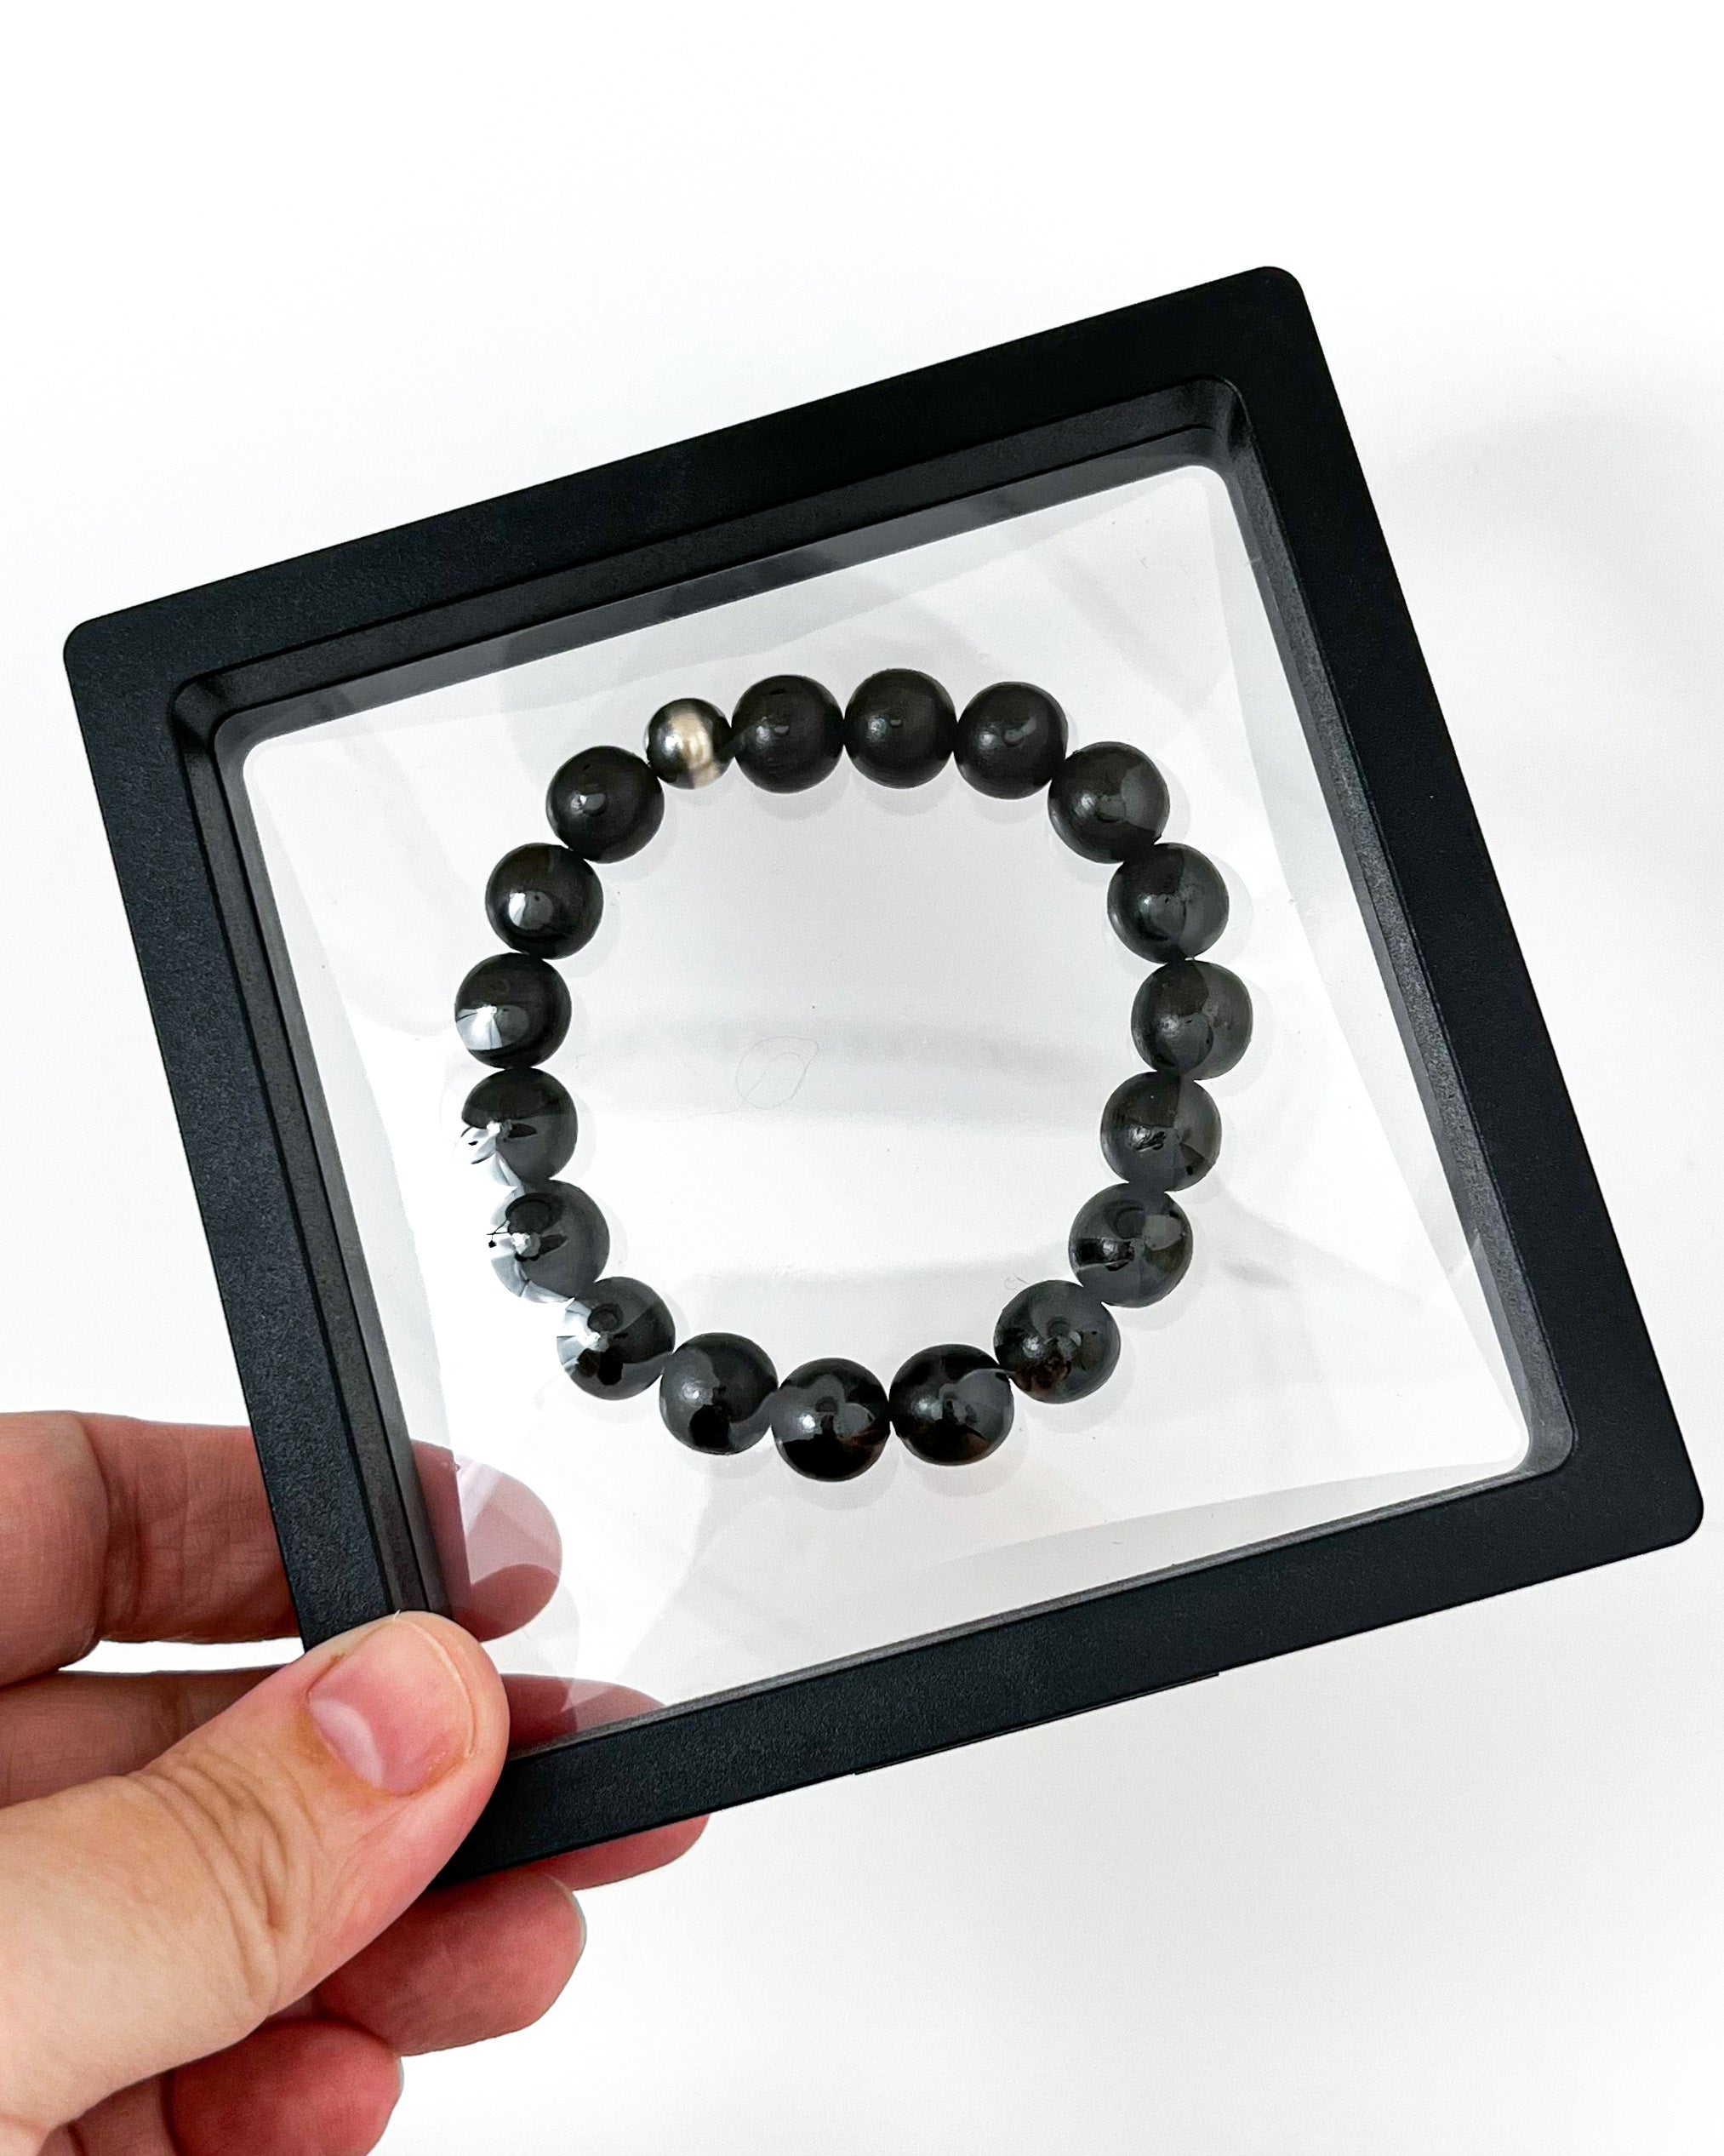 Sutton Bracelet | Ebony Wood Beads | Unisex Healing Crystal | Gemstone Stretch Bracelet | House of Jaco | Scripted Jewelry